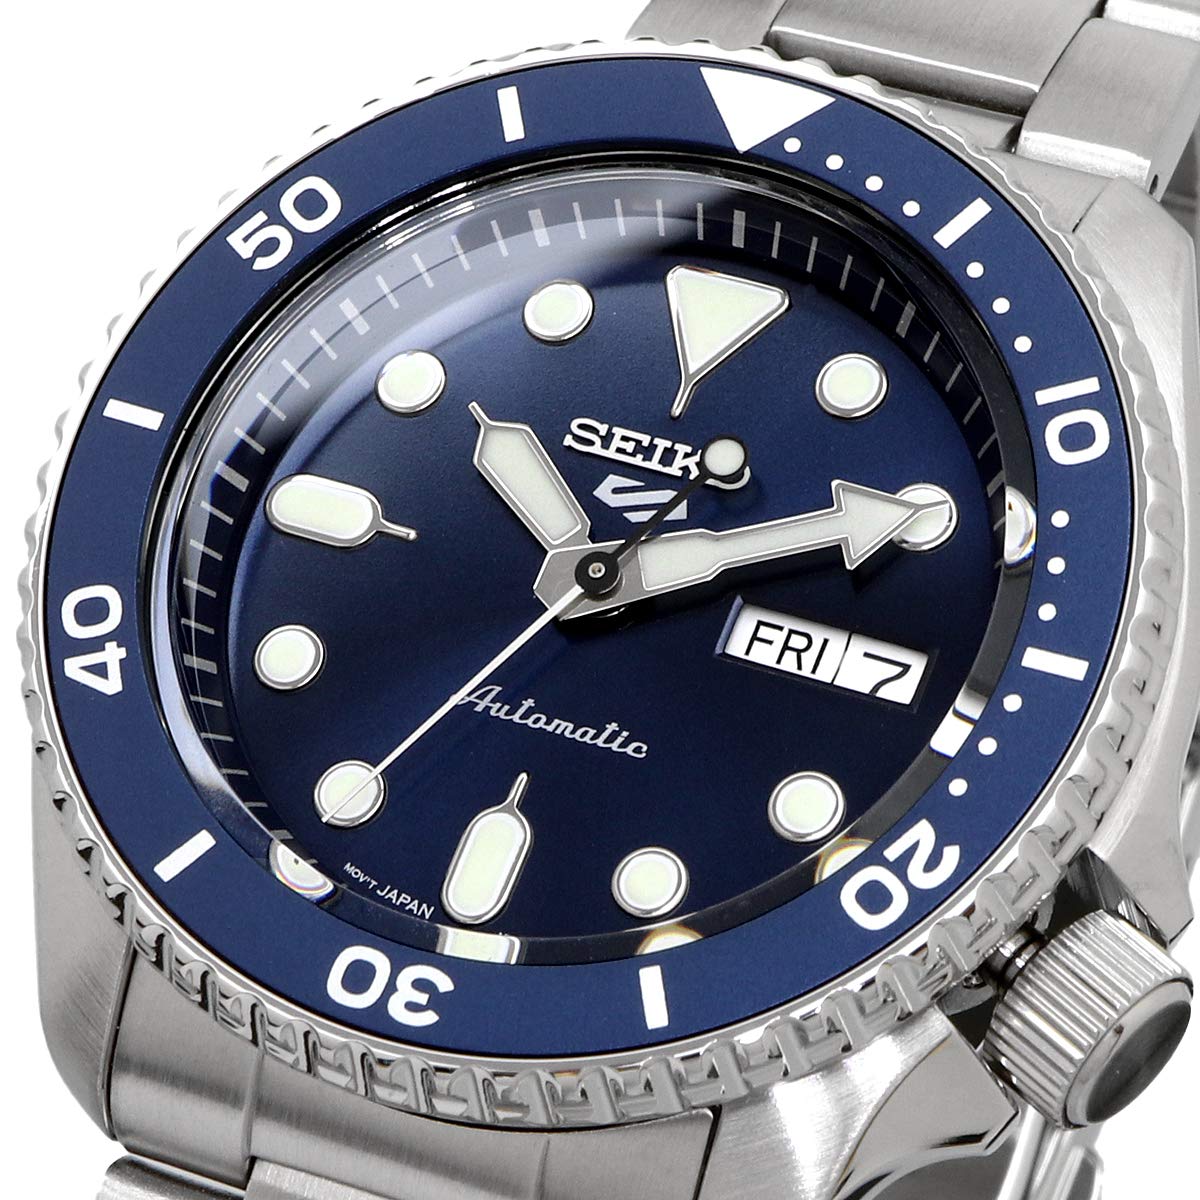 SEIKO SRPD51 5 Sports Men's Watch Silver-Tone 42.5mm Stainless Steel, Blue